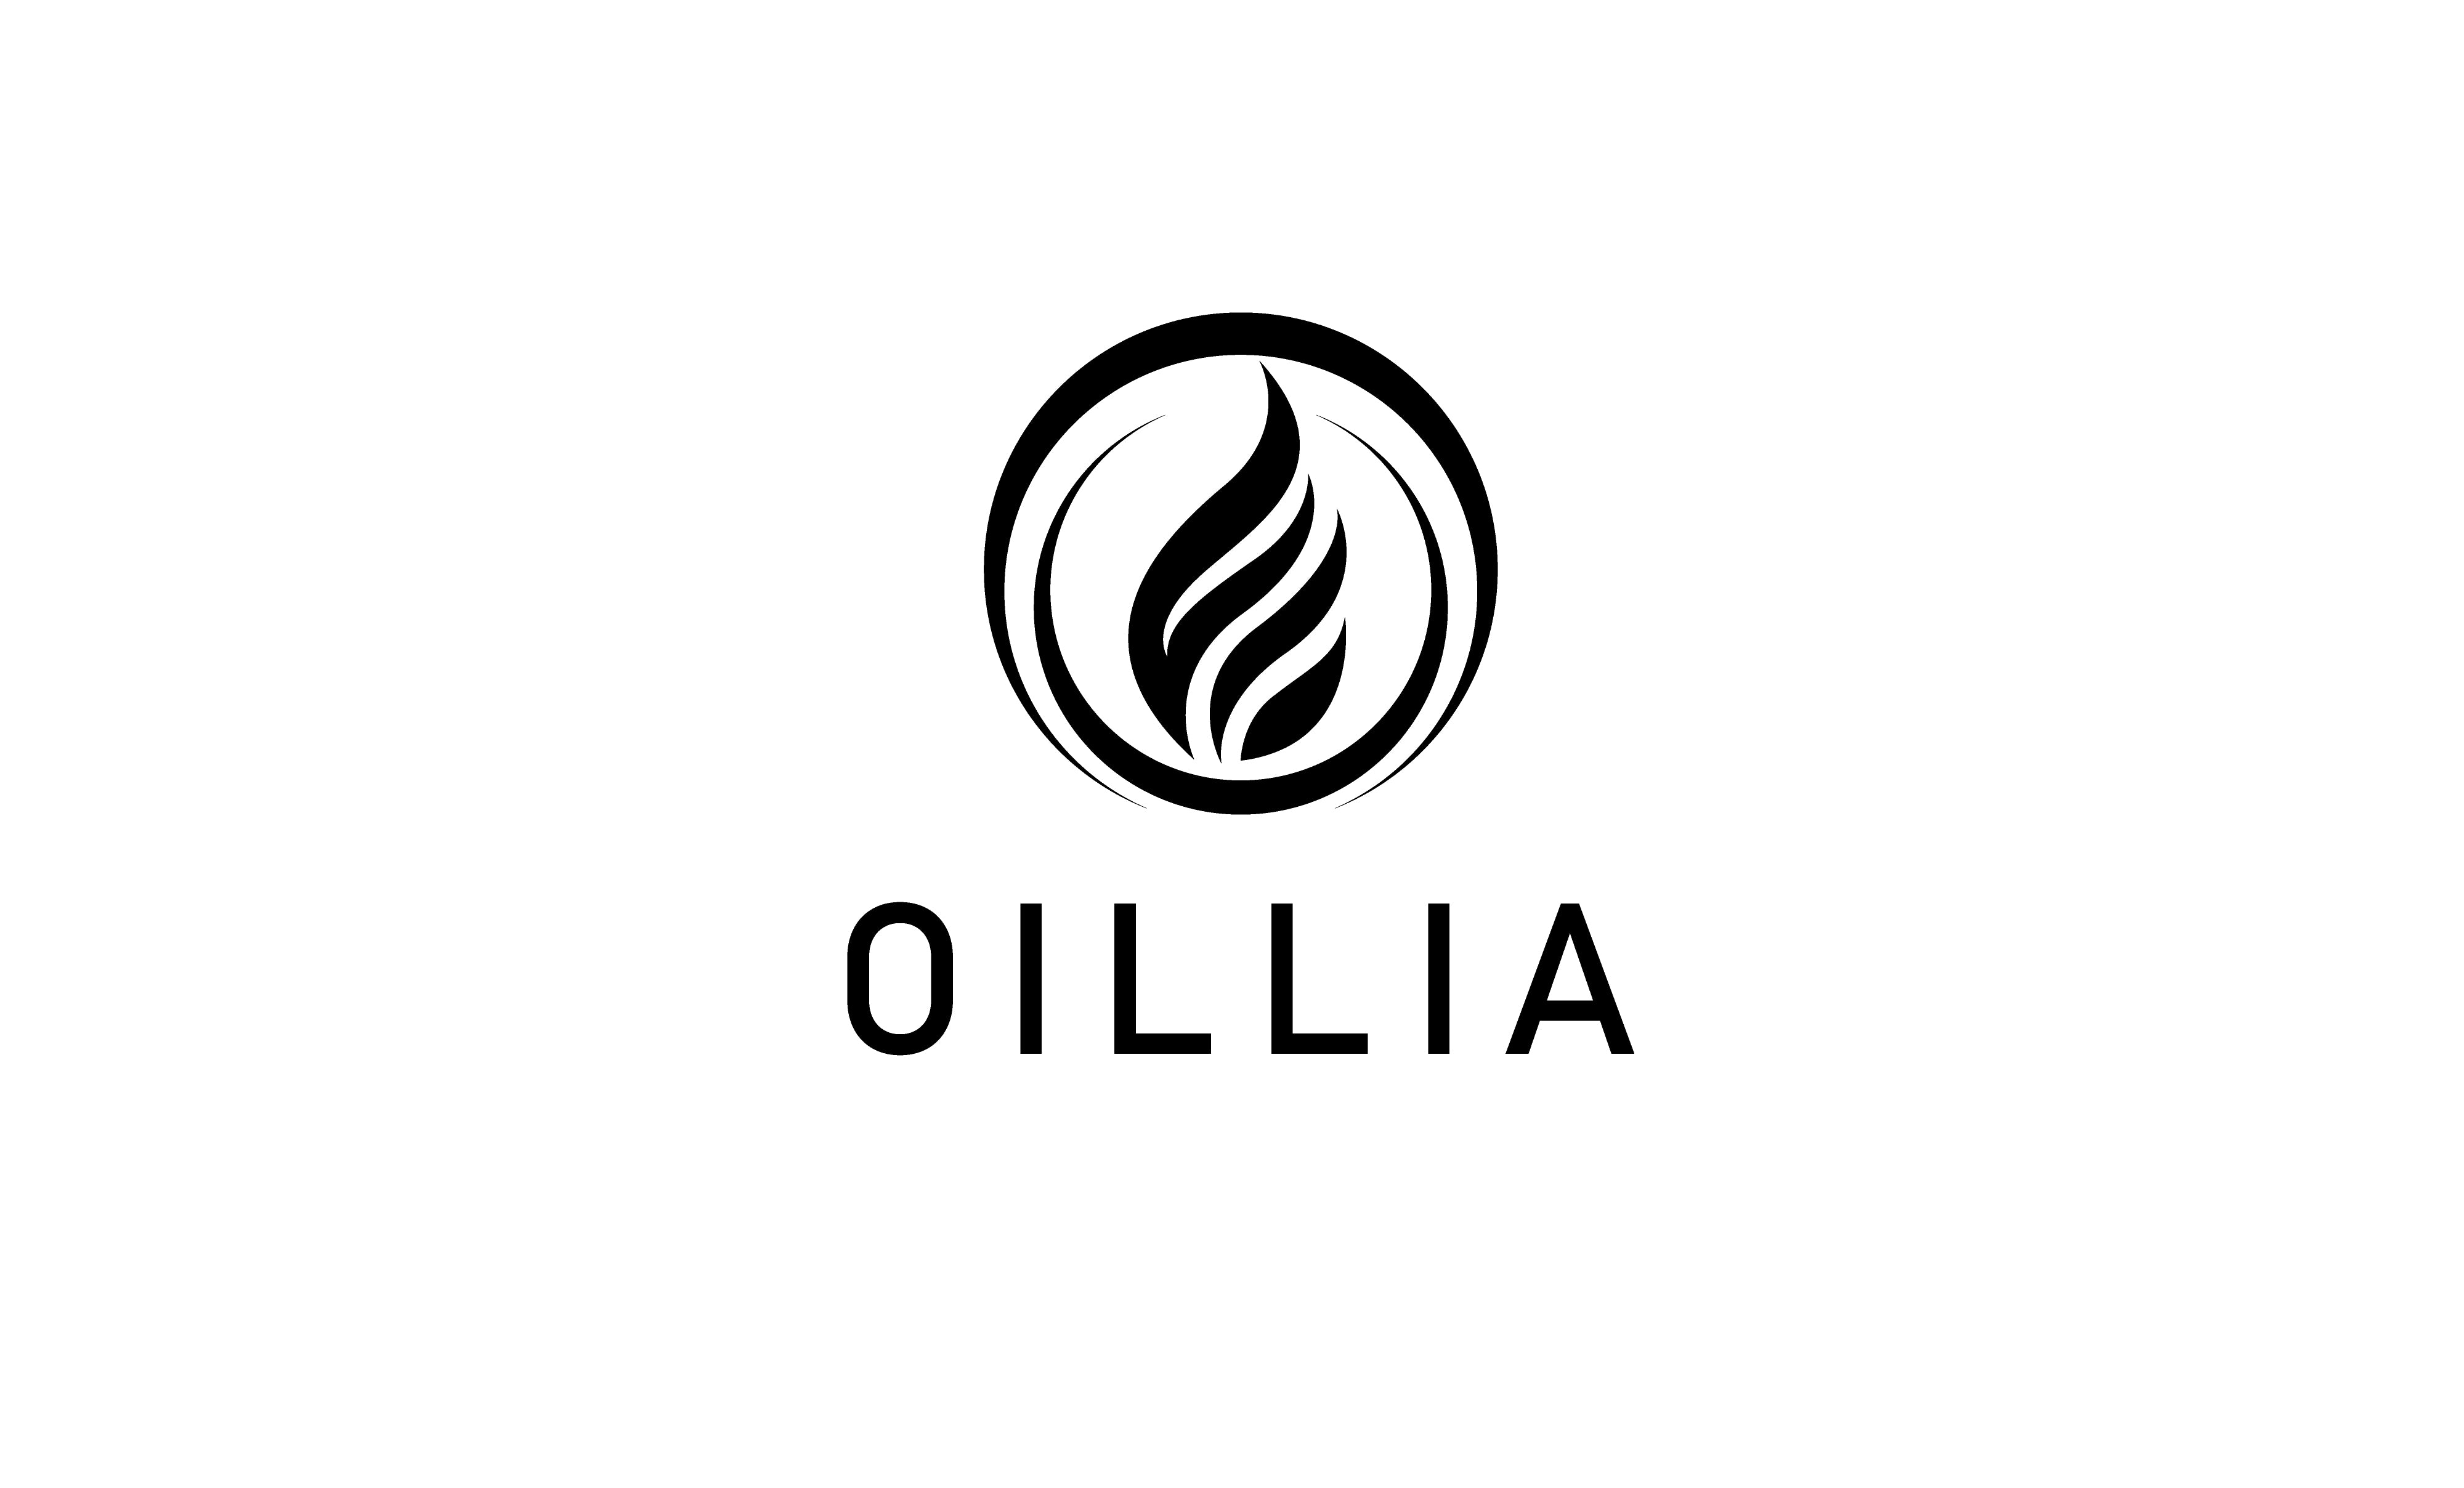 Oillia limited